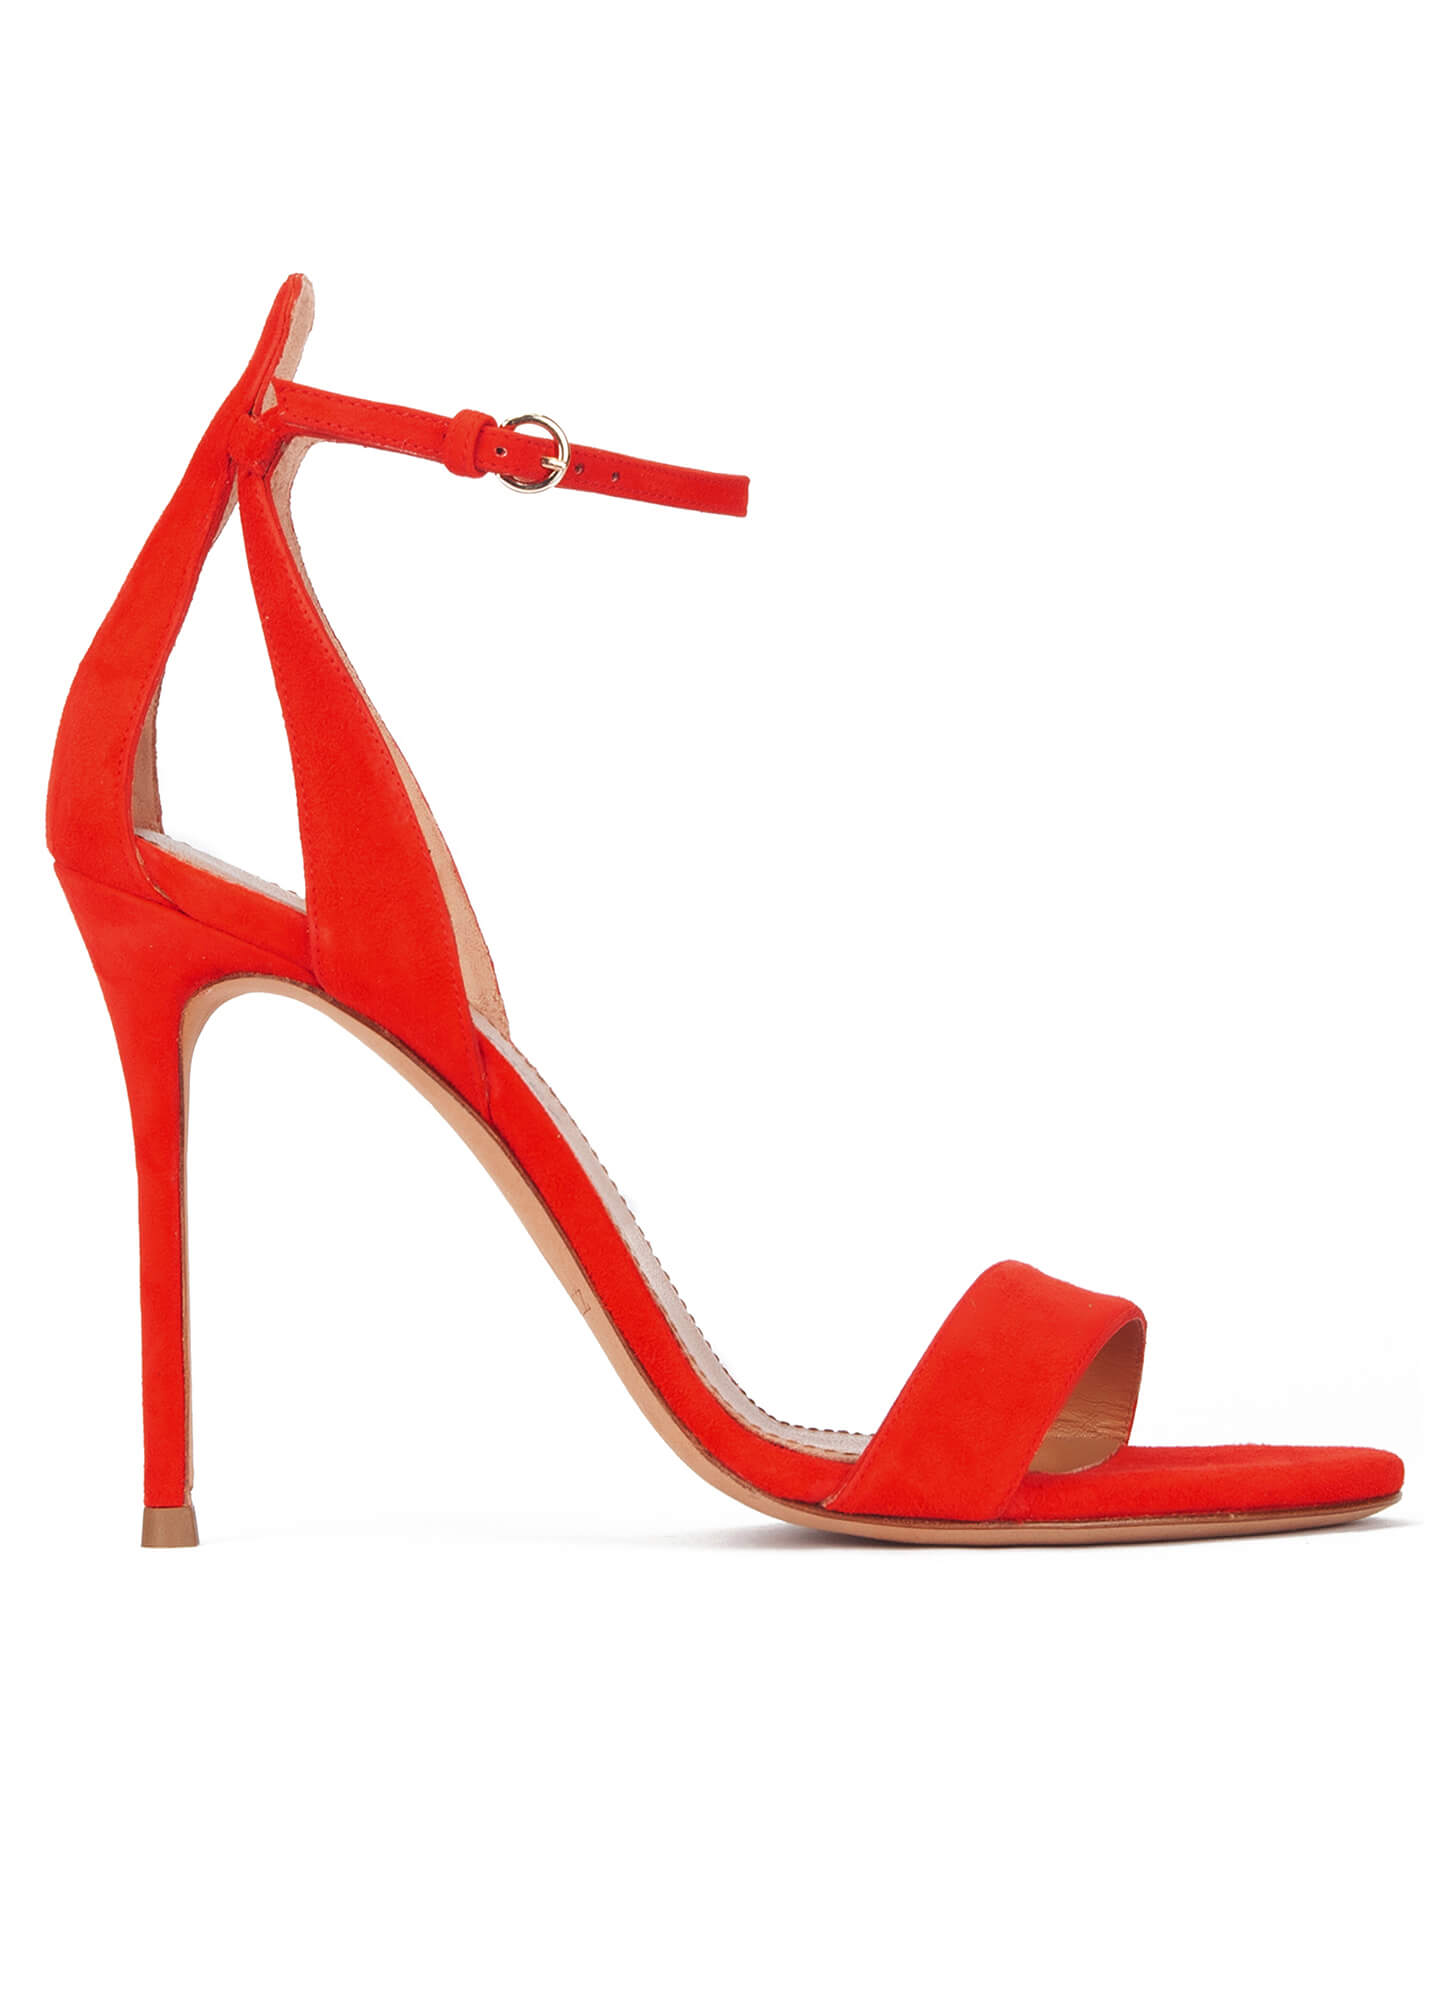 red high heels ireland